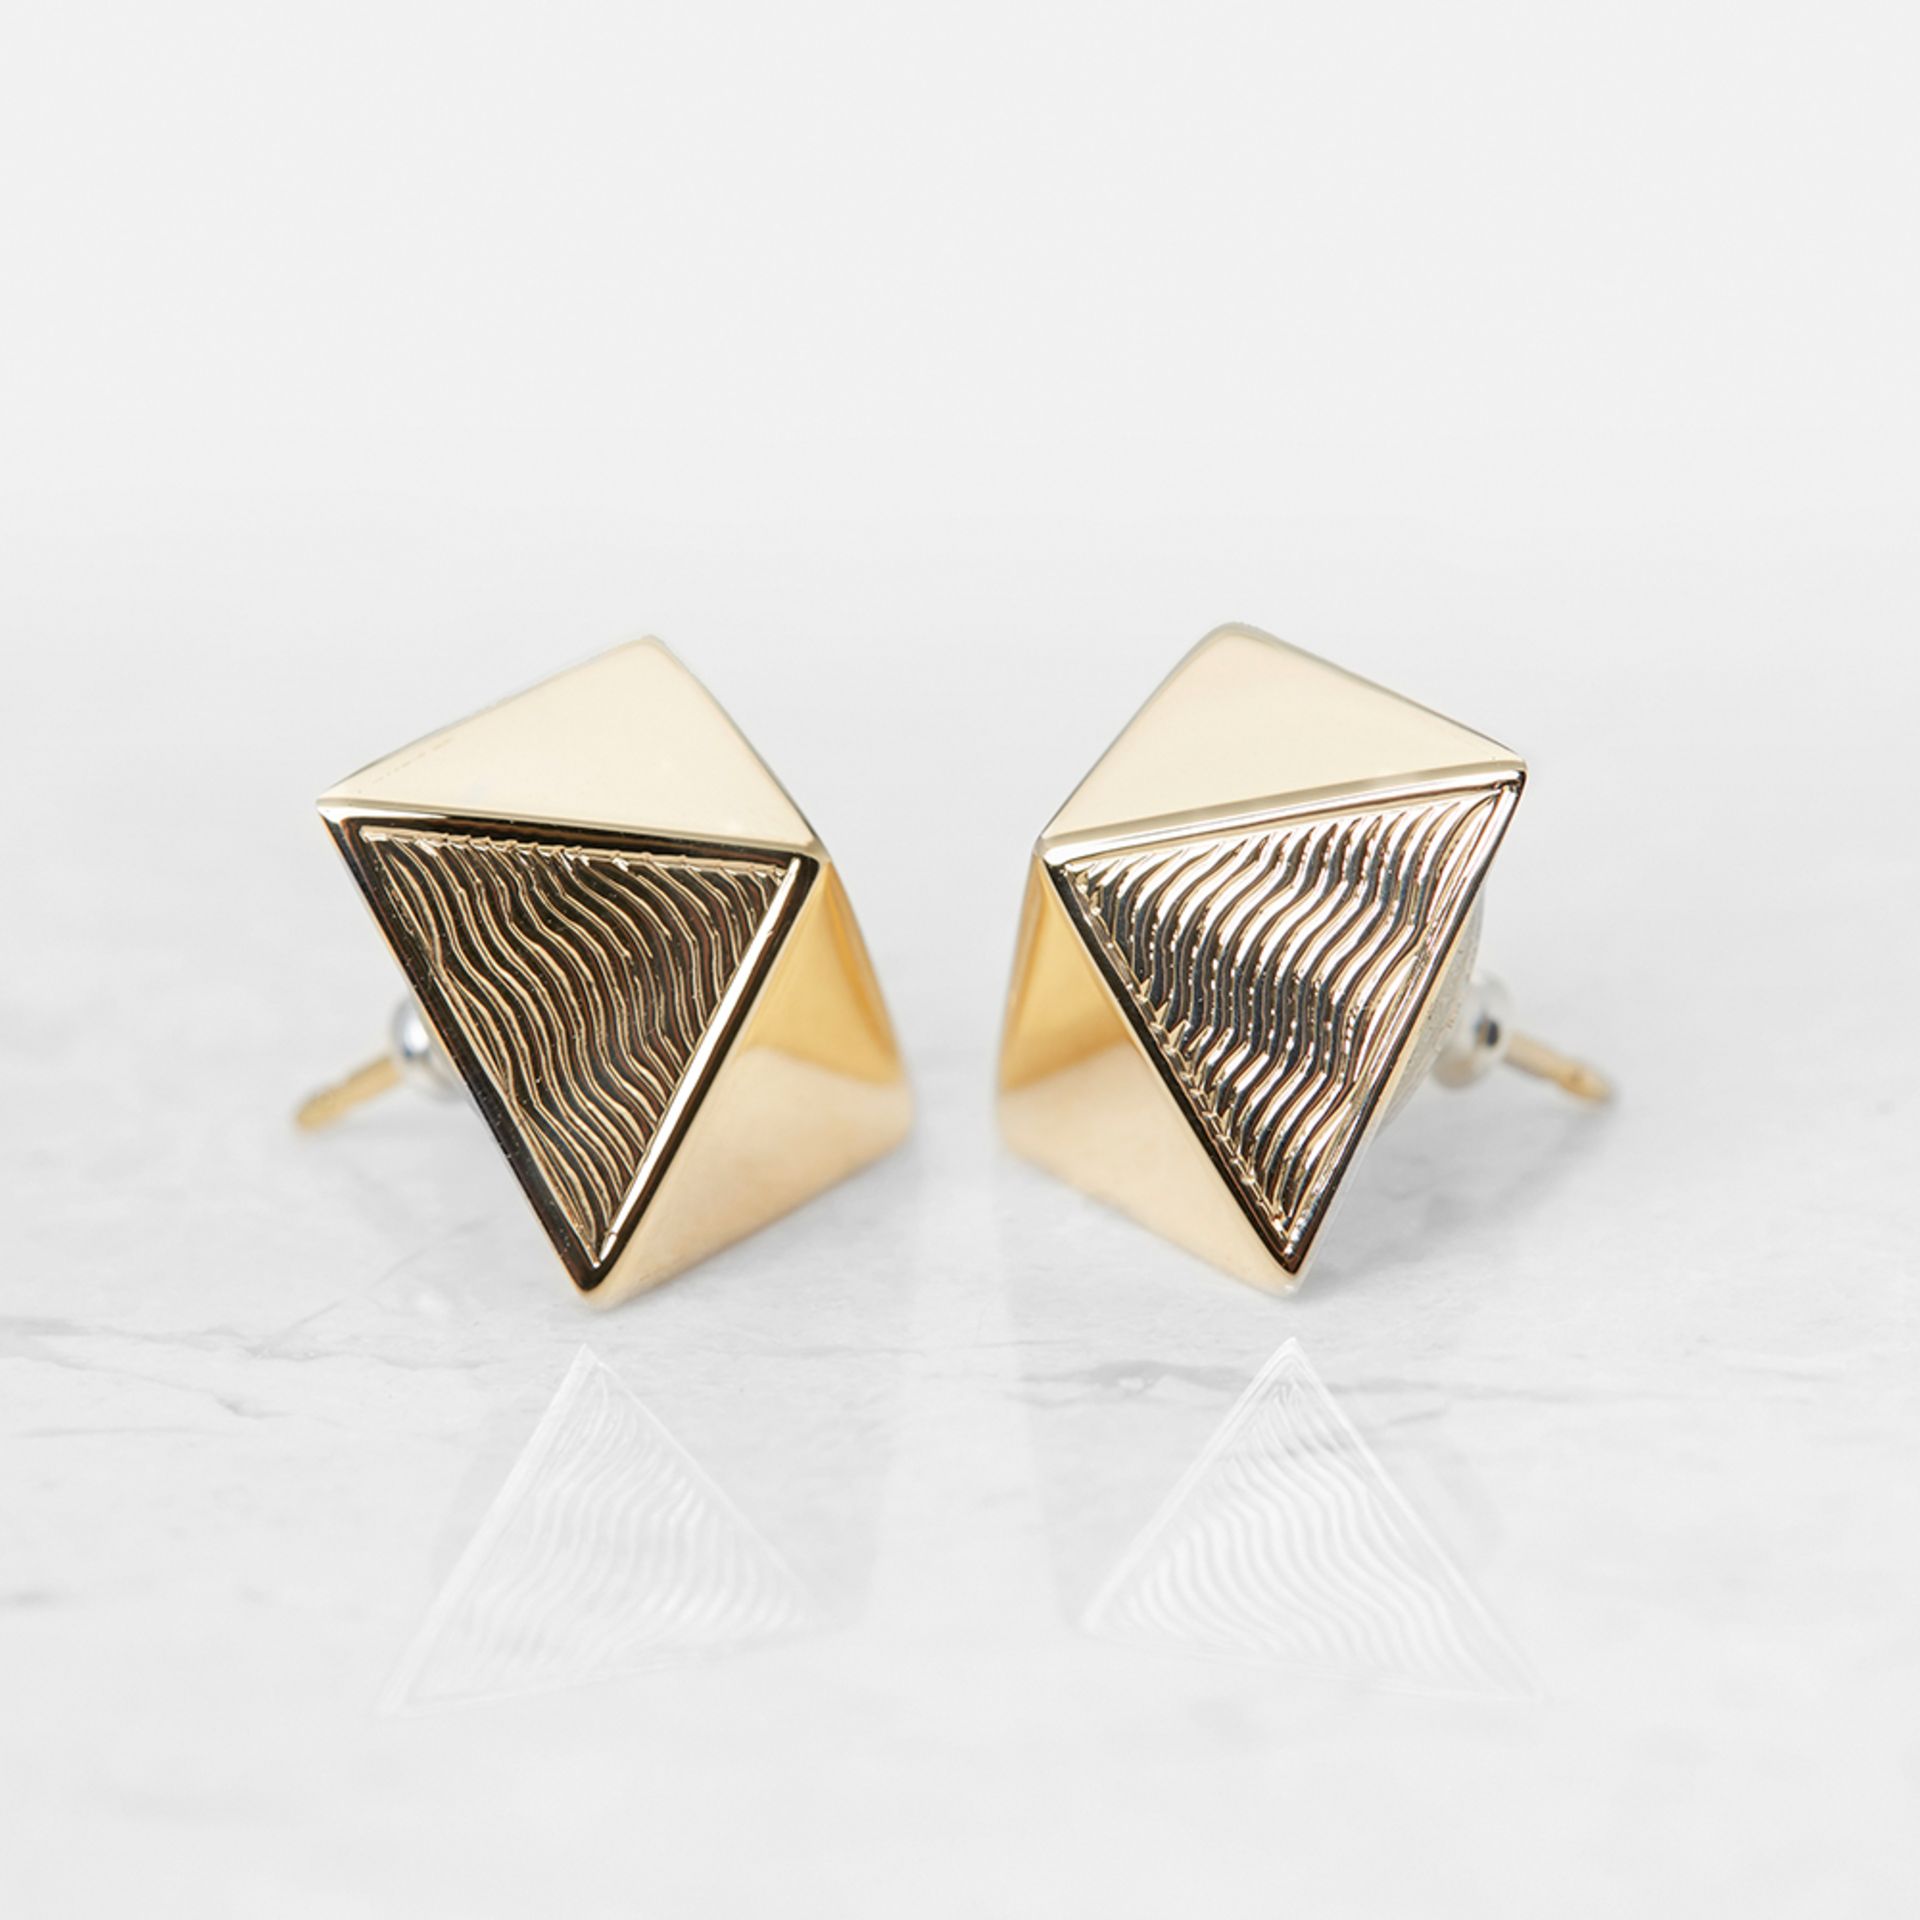 Van Cleef & Arpels 18k Yellow Gold Pyramid Style Earrings - Image 2 of 6